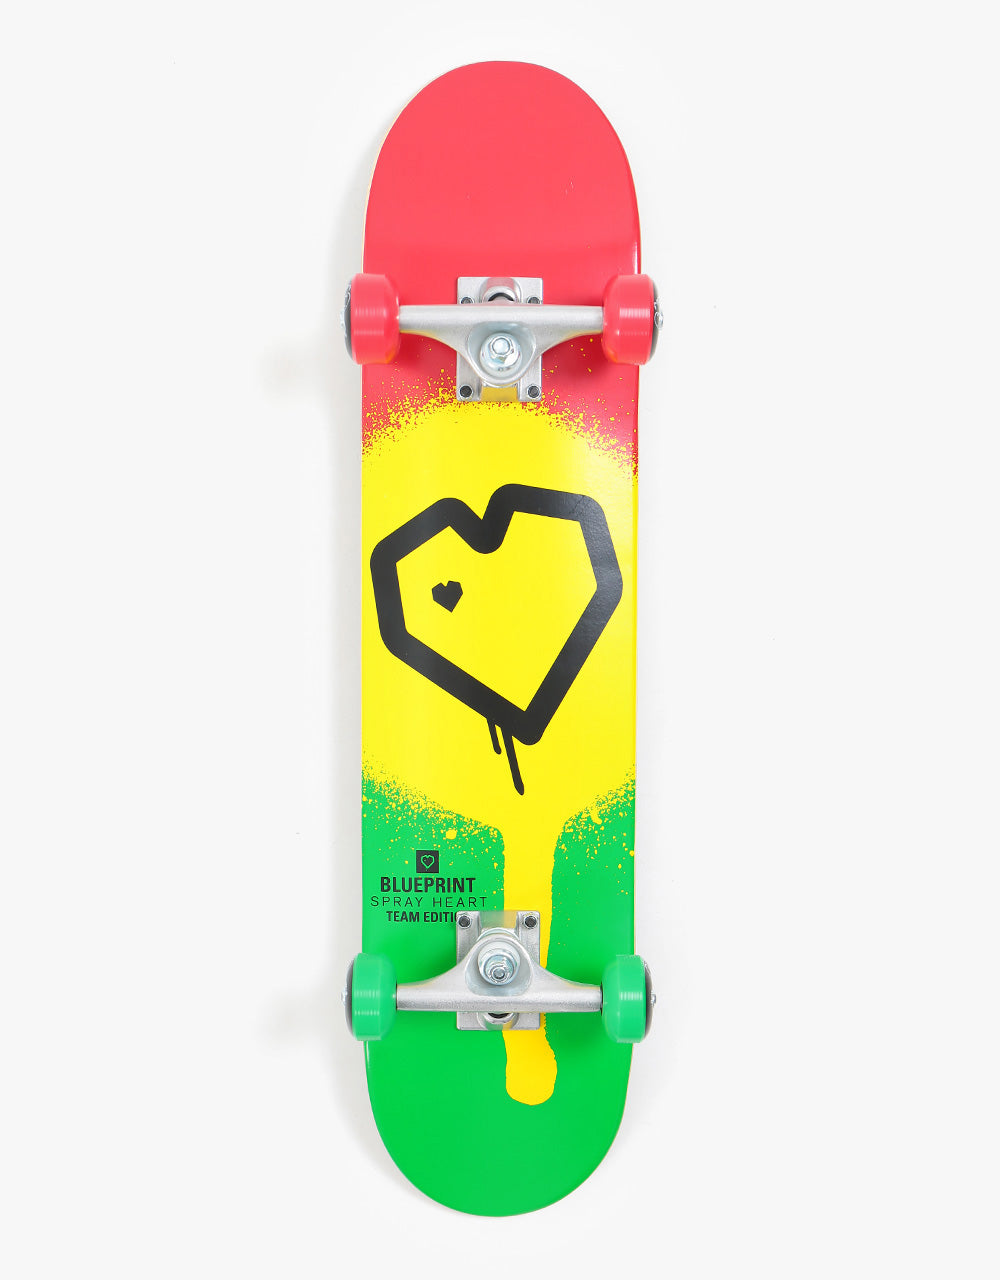 Blueprint Spray Heart 'Soft Top' Micro Complete Skateboard - 6.75"